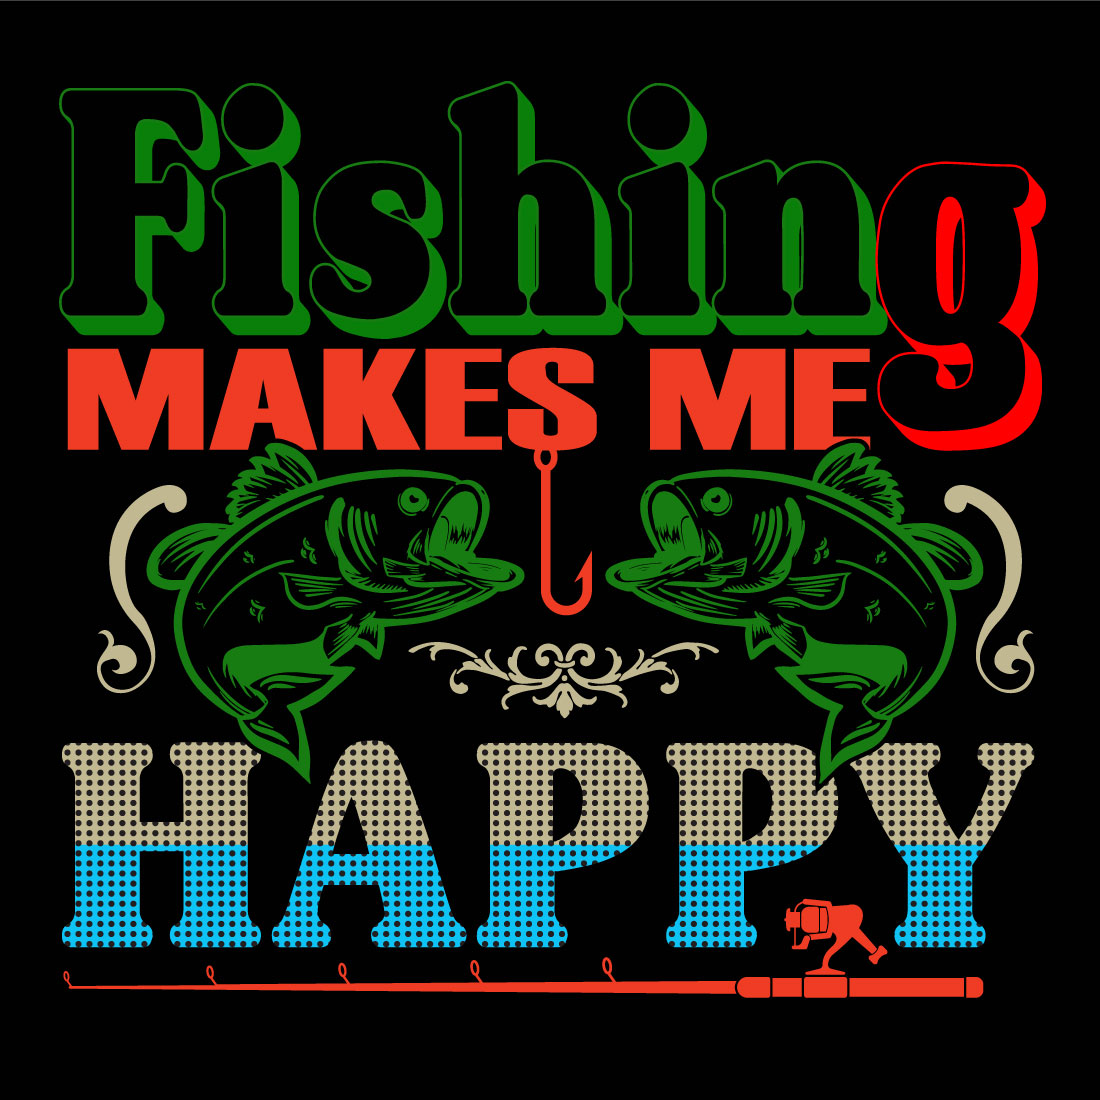 Fishing Makes me happy typography t-shirt design